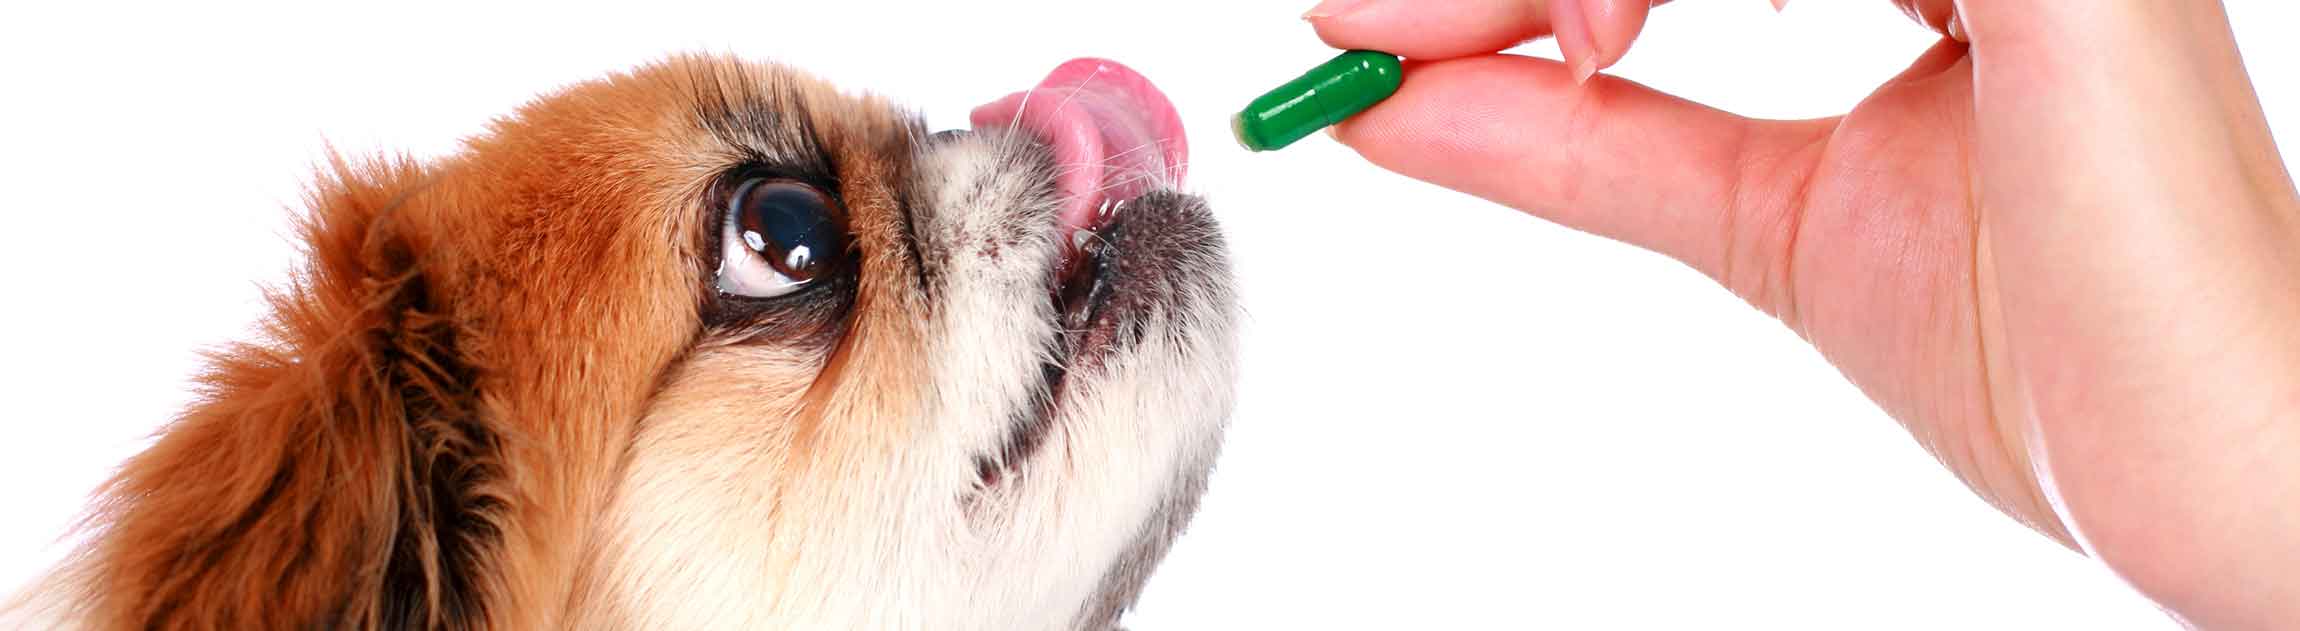 Dog eating pill